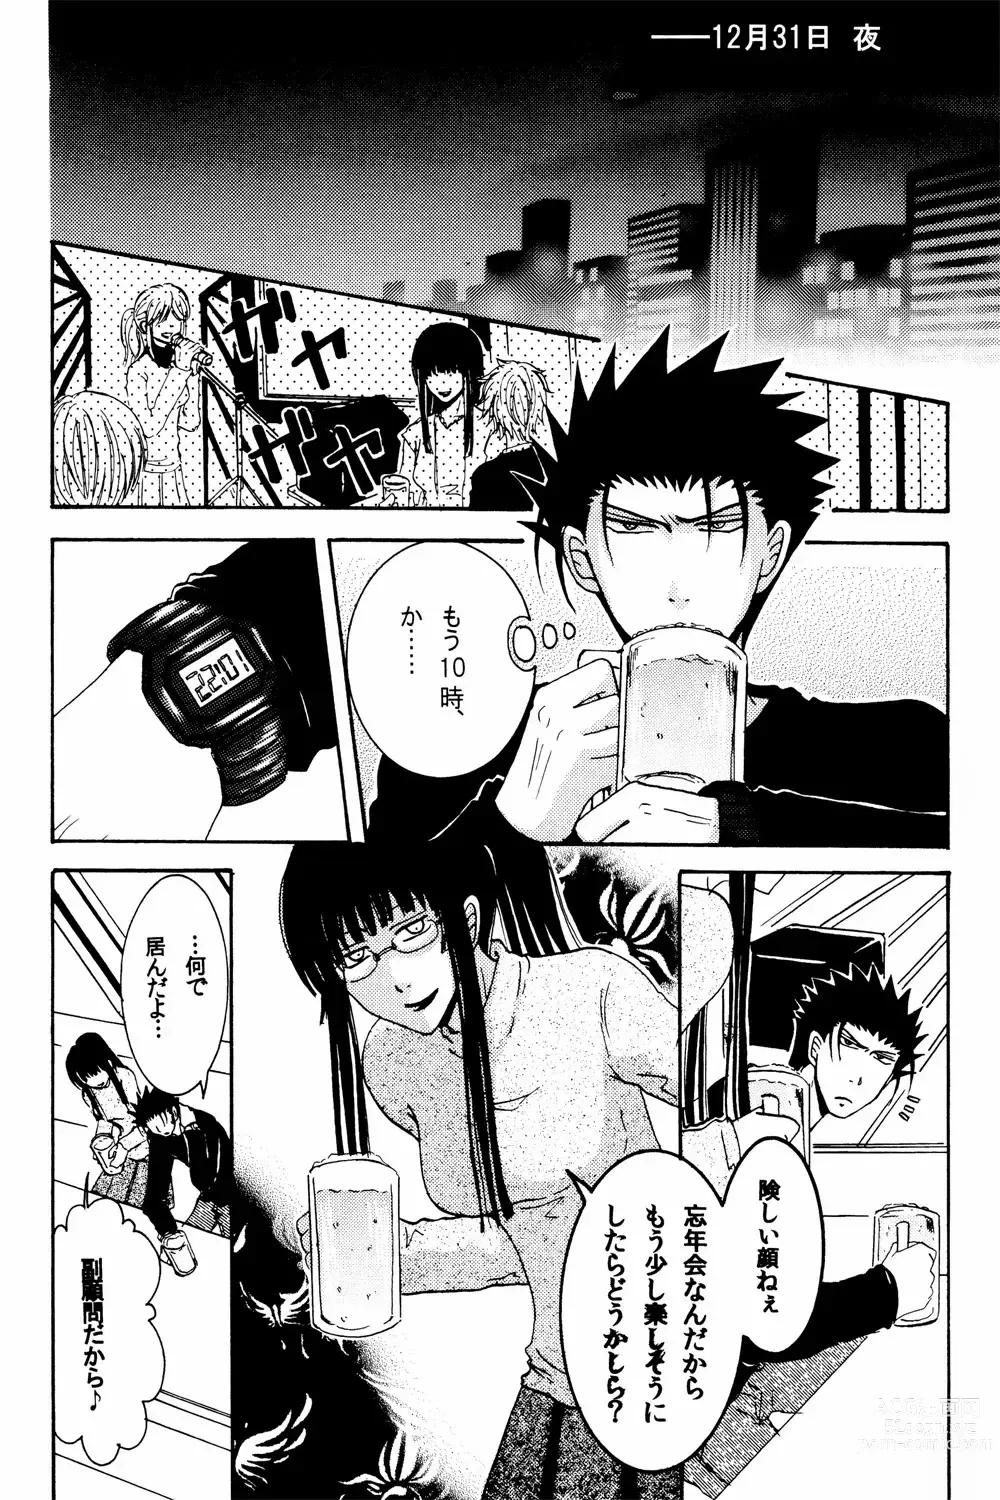 Page 7 of doujinshi New Year wa Kimi no Bed de.